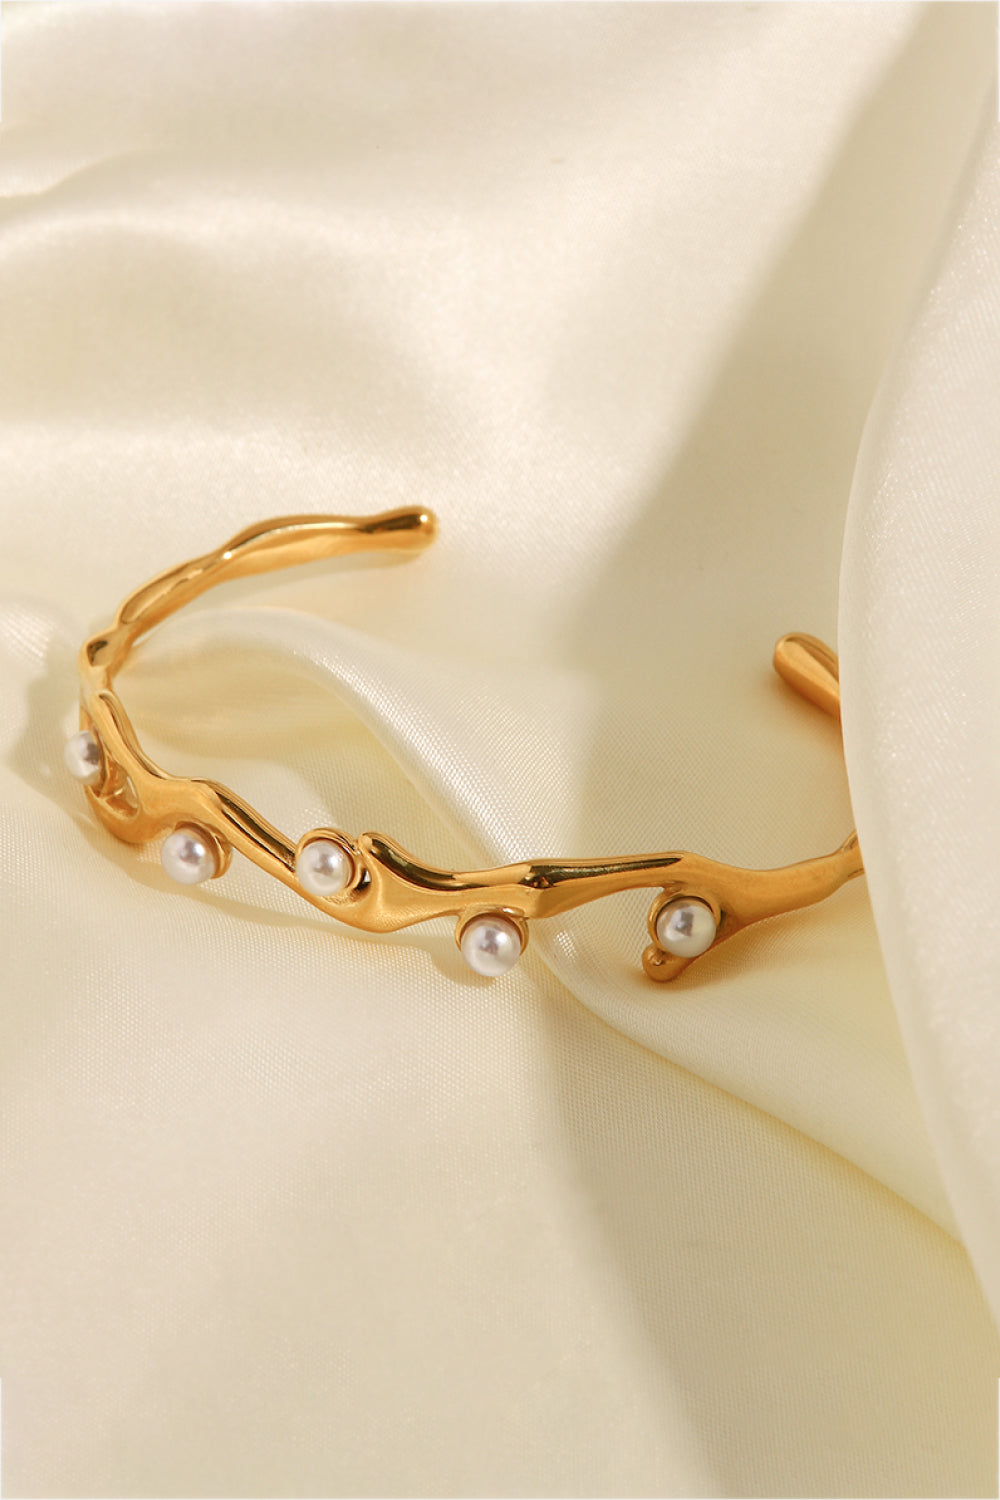 Inlaid Synthetic Pearl Open Bracelet - Gold / One Size - Women’s Jewelry - Bracelets - 3 - 2024